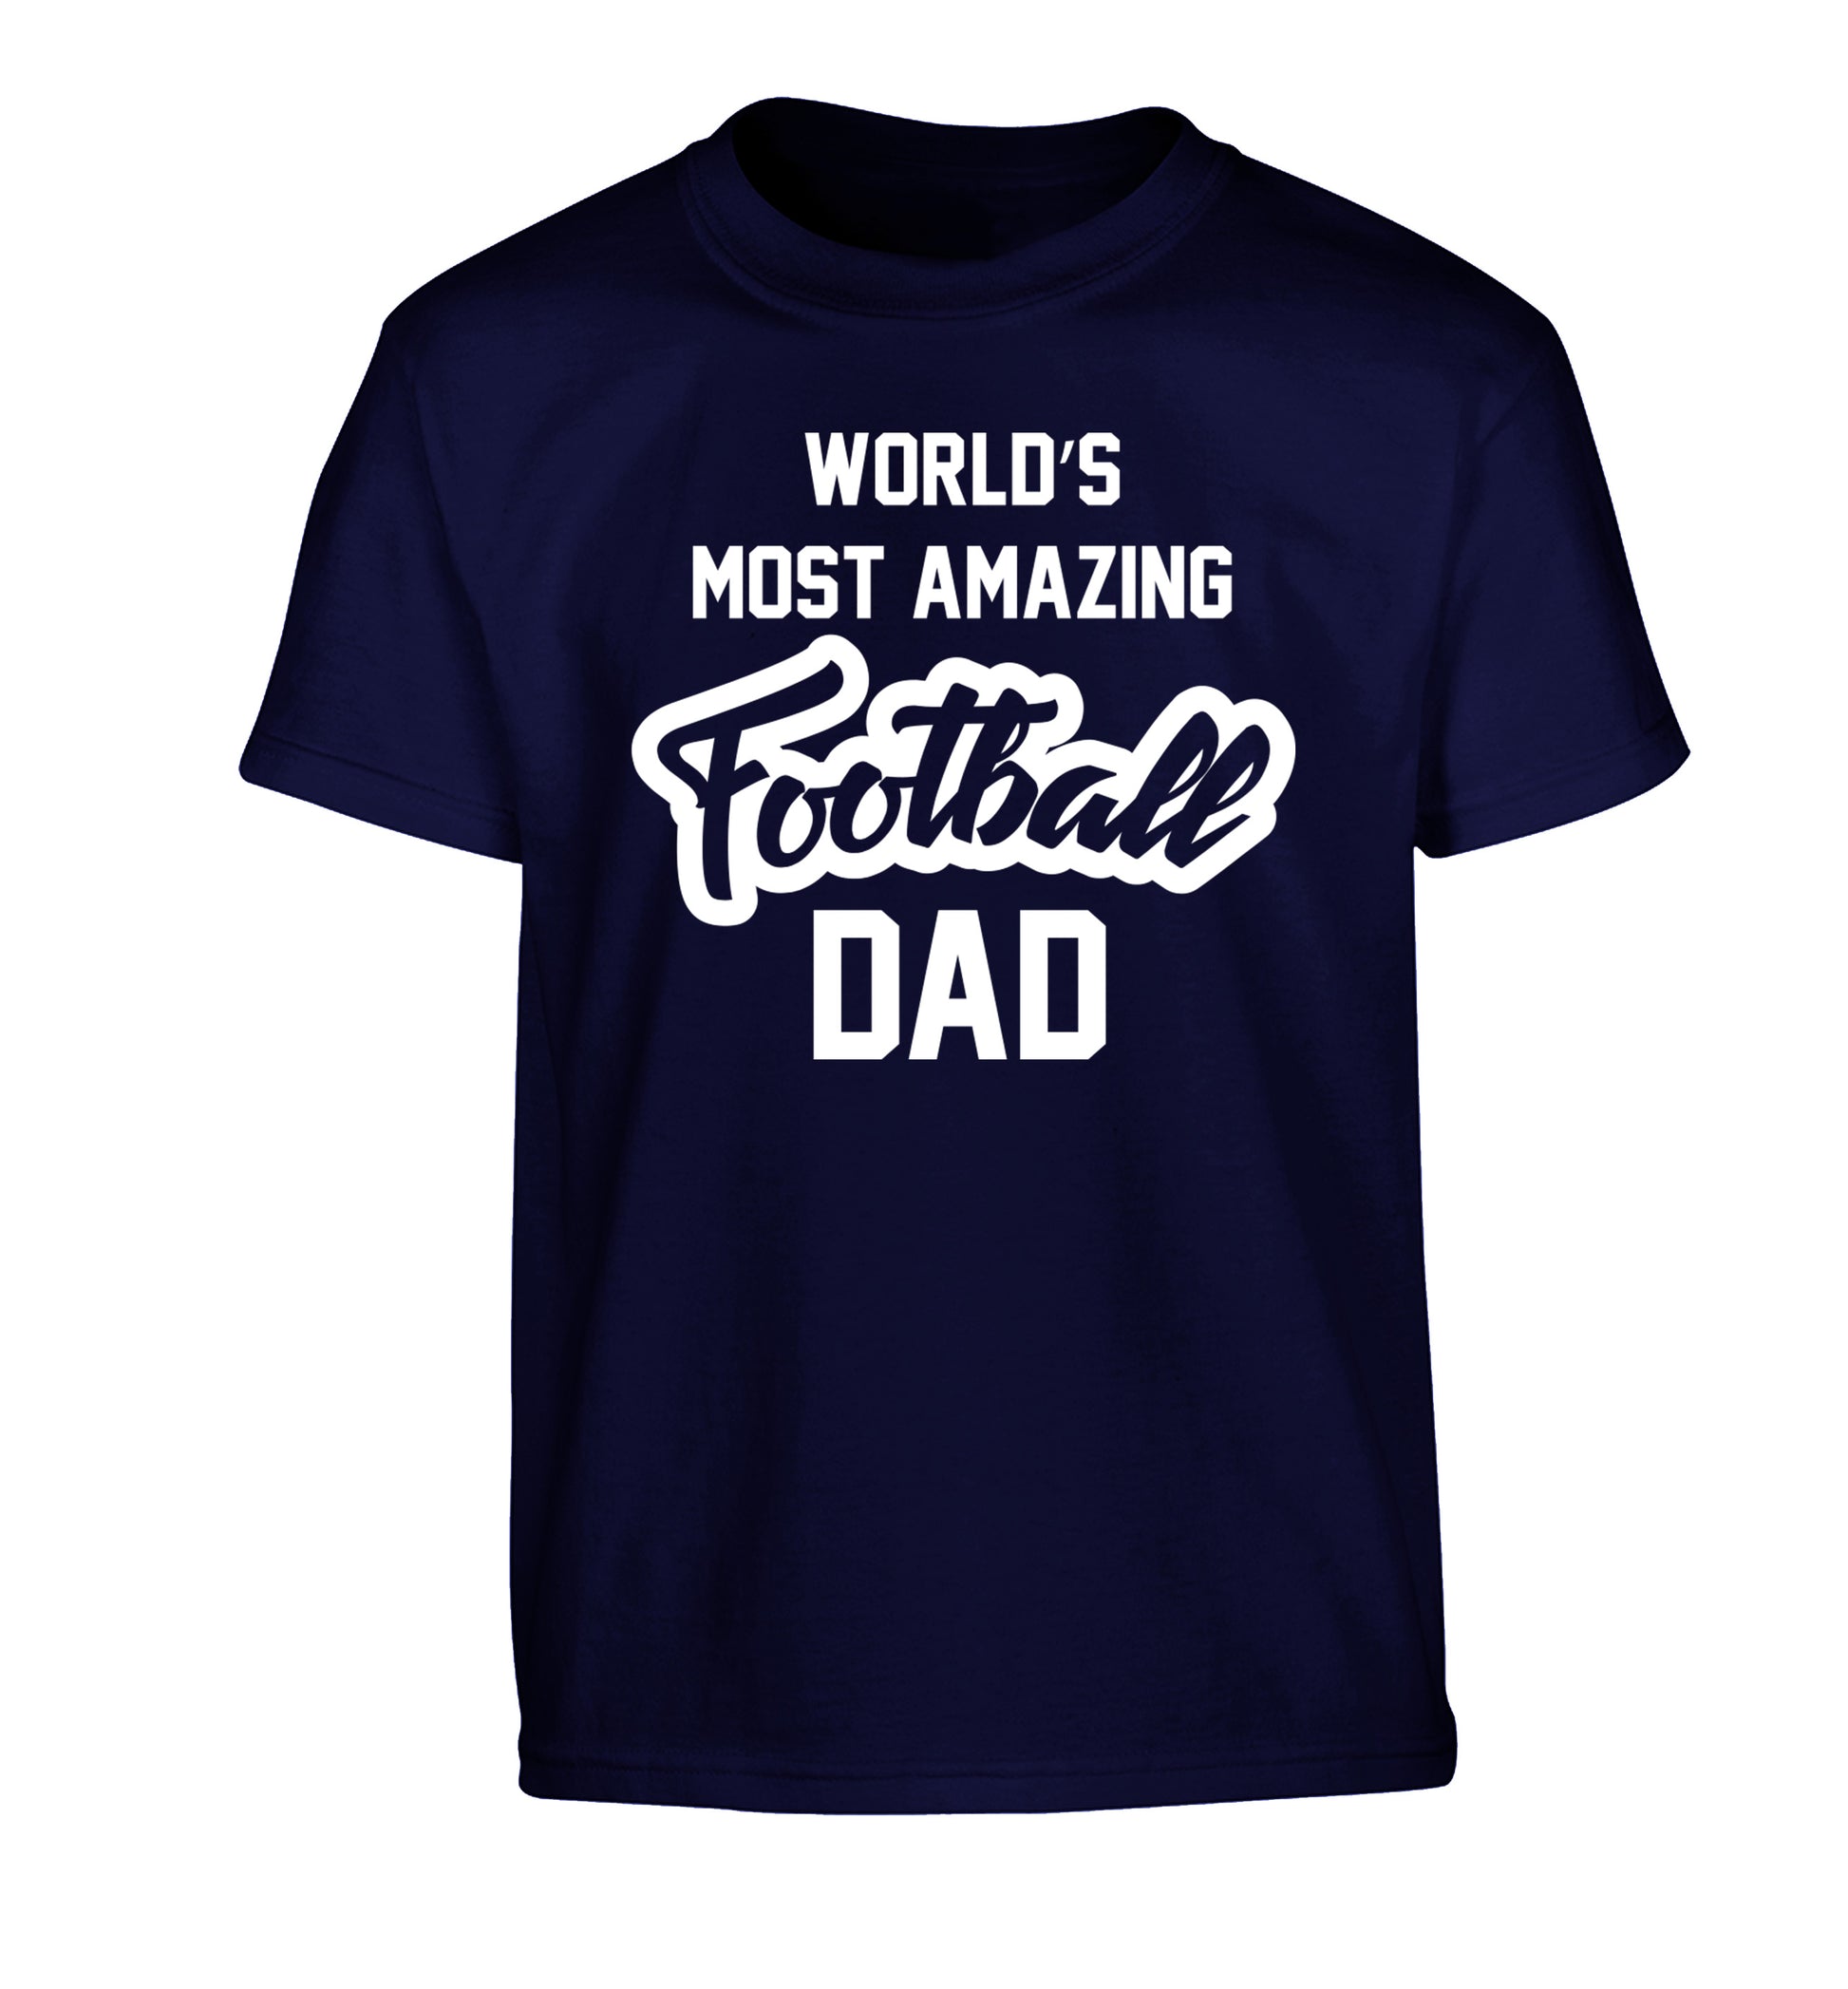 Worlds most amazing football dad Children's navy Tshirt 12-14 Years